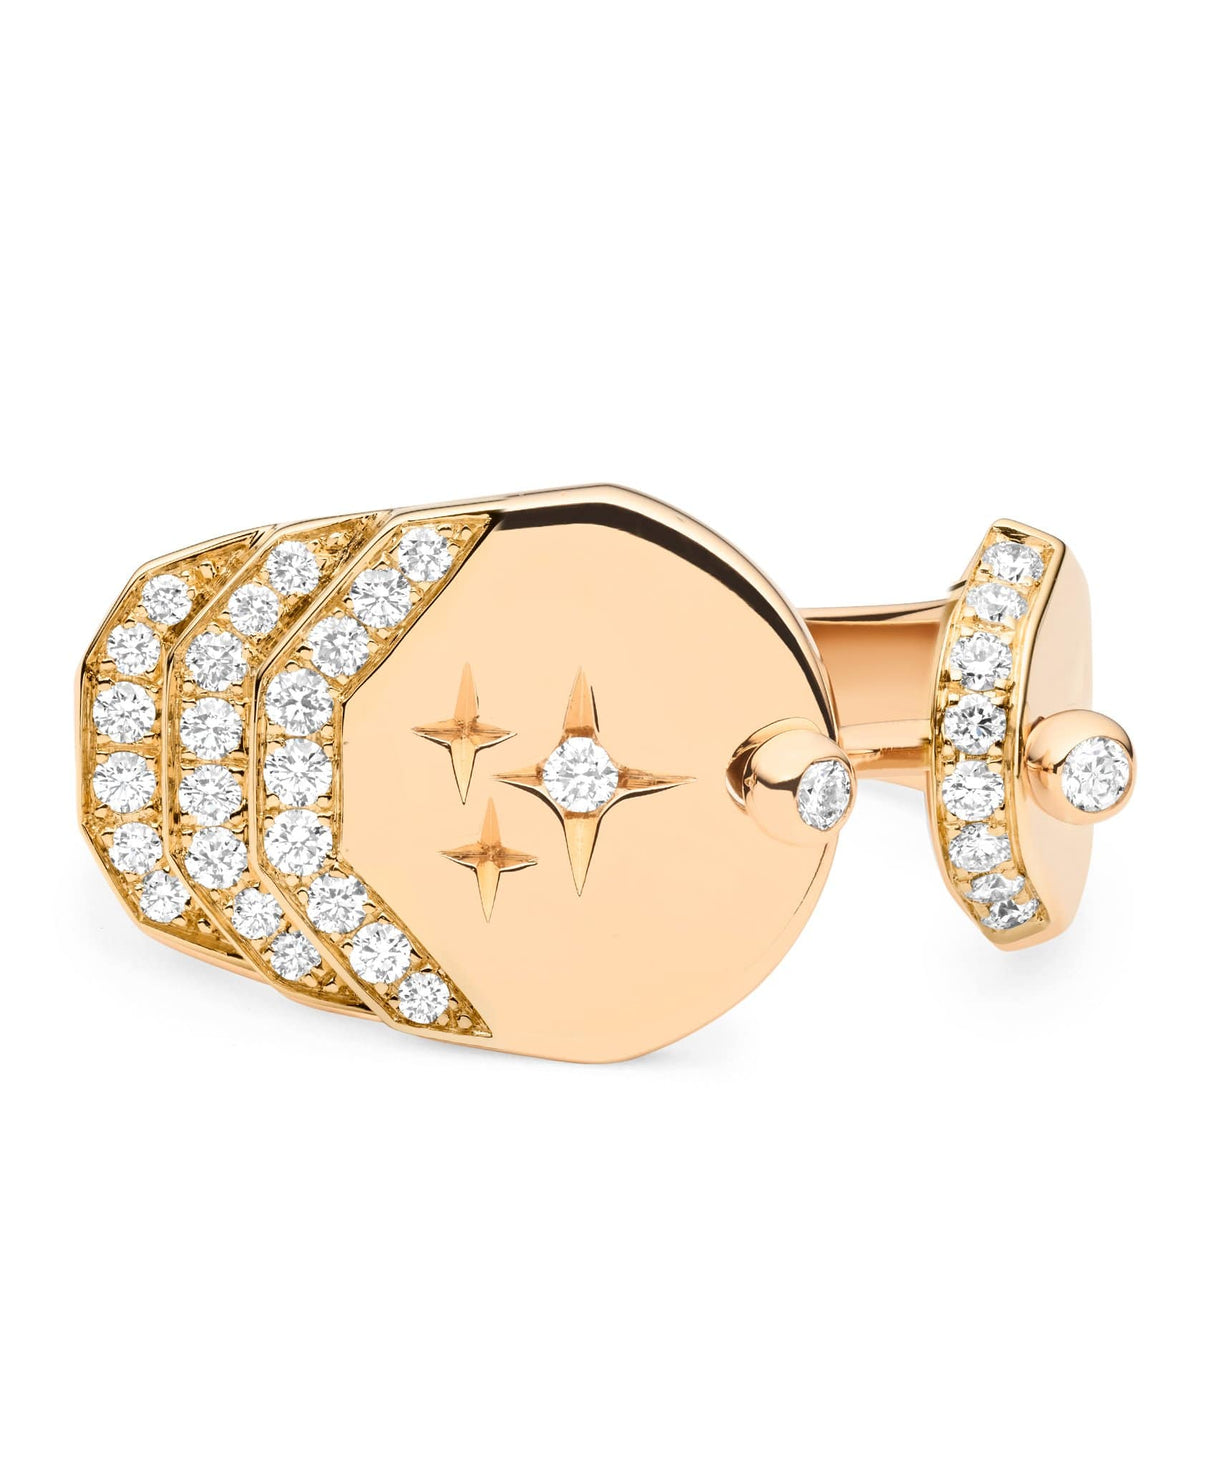 Sparkles Diamond Ring: Discover Luxury Fine Jewelry | Nouvel Heritage